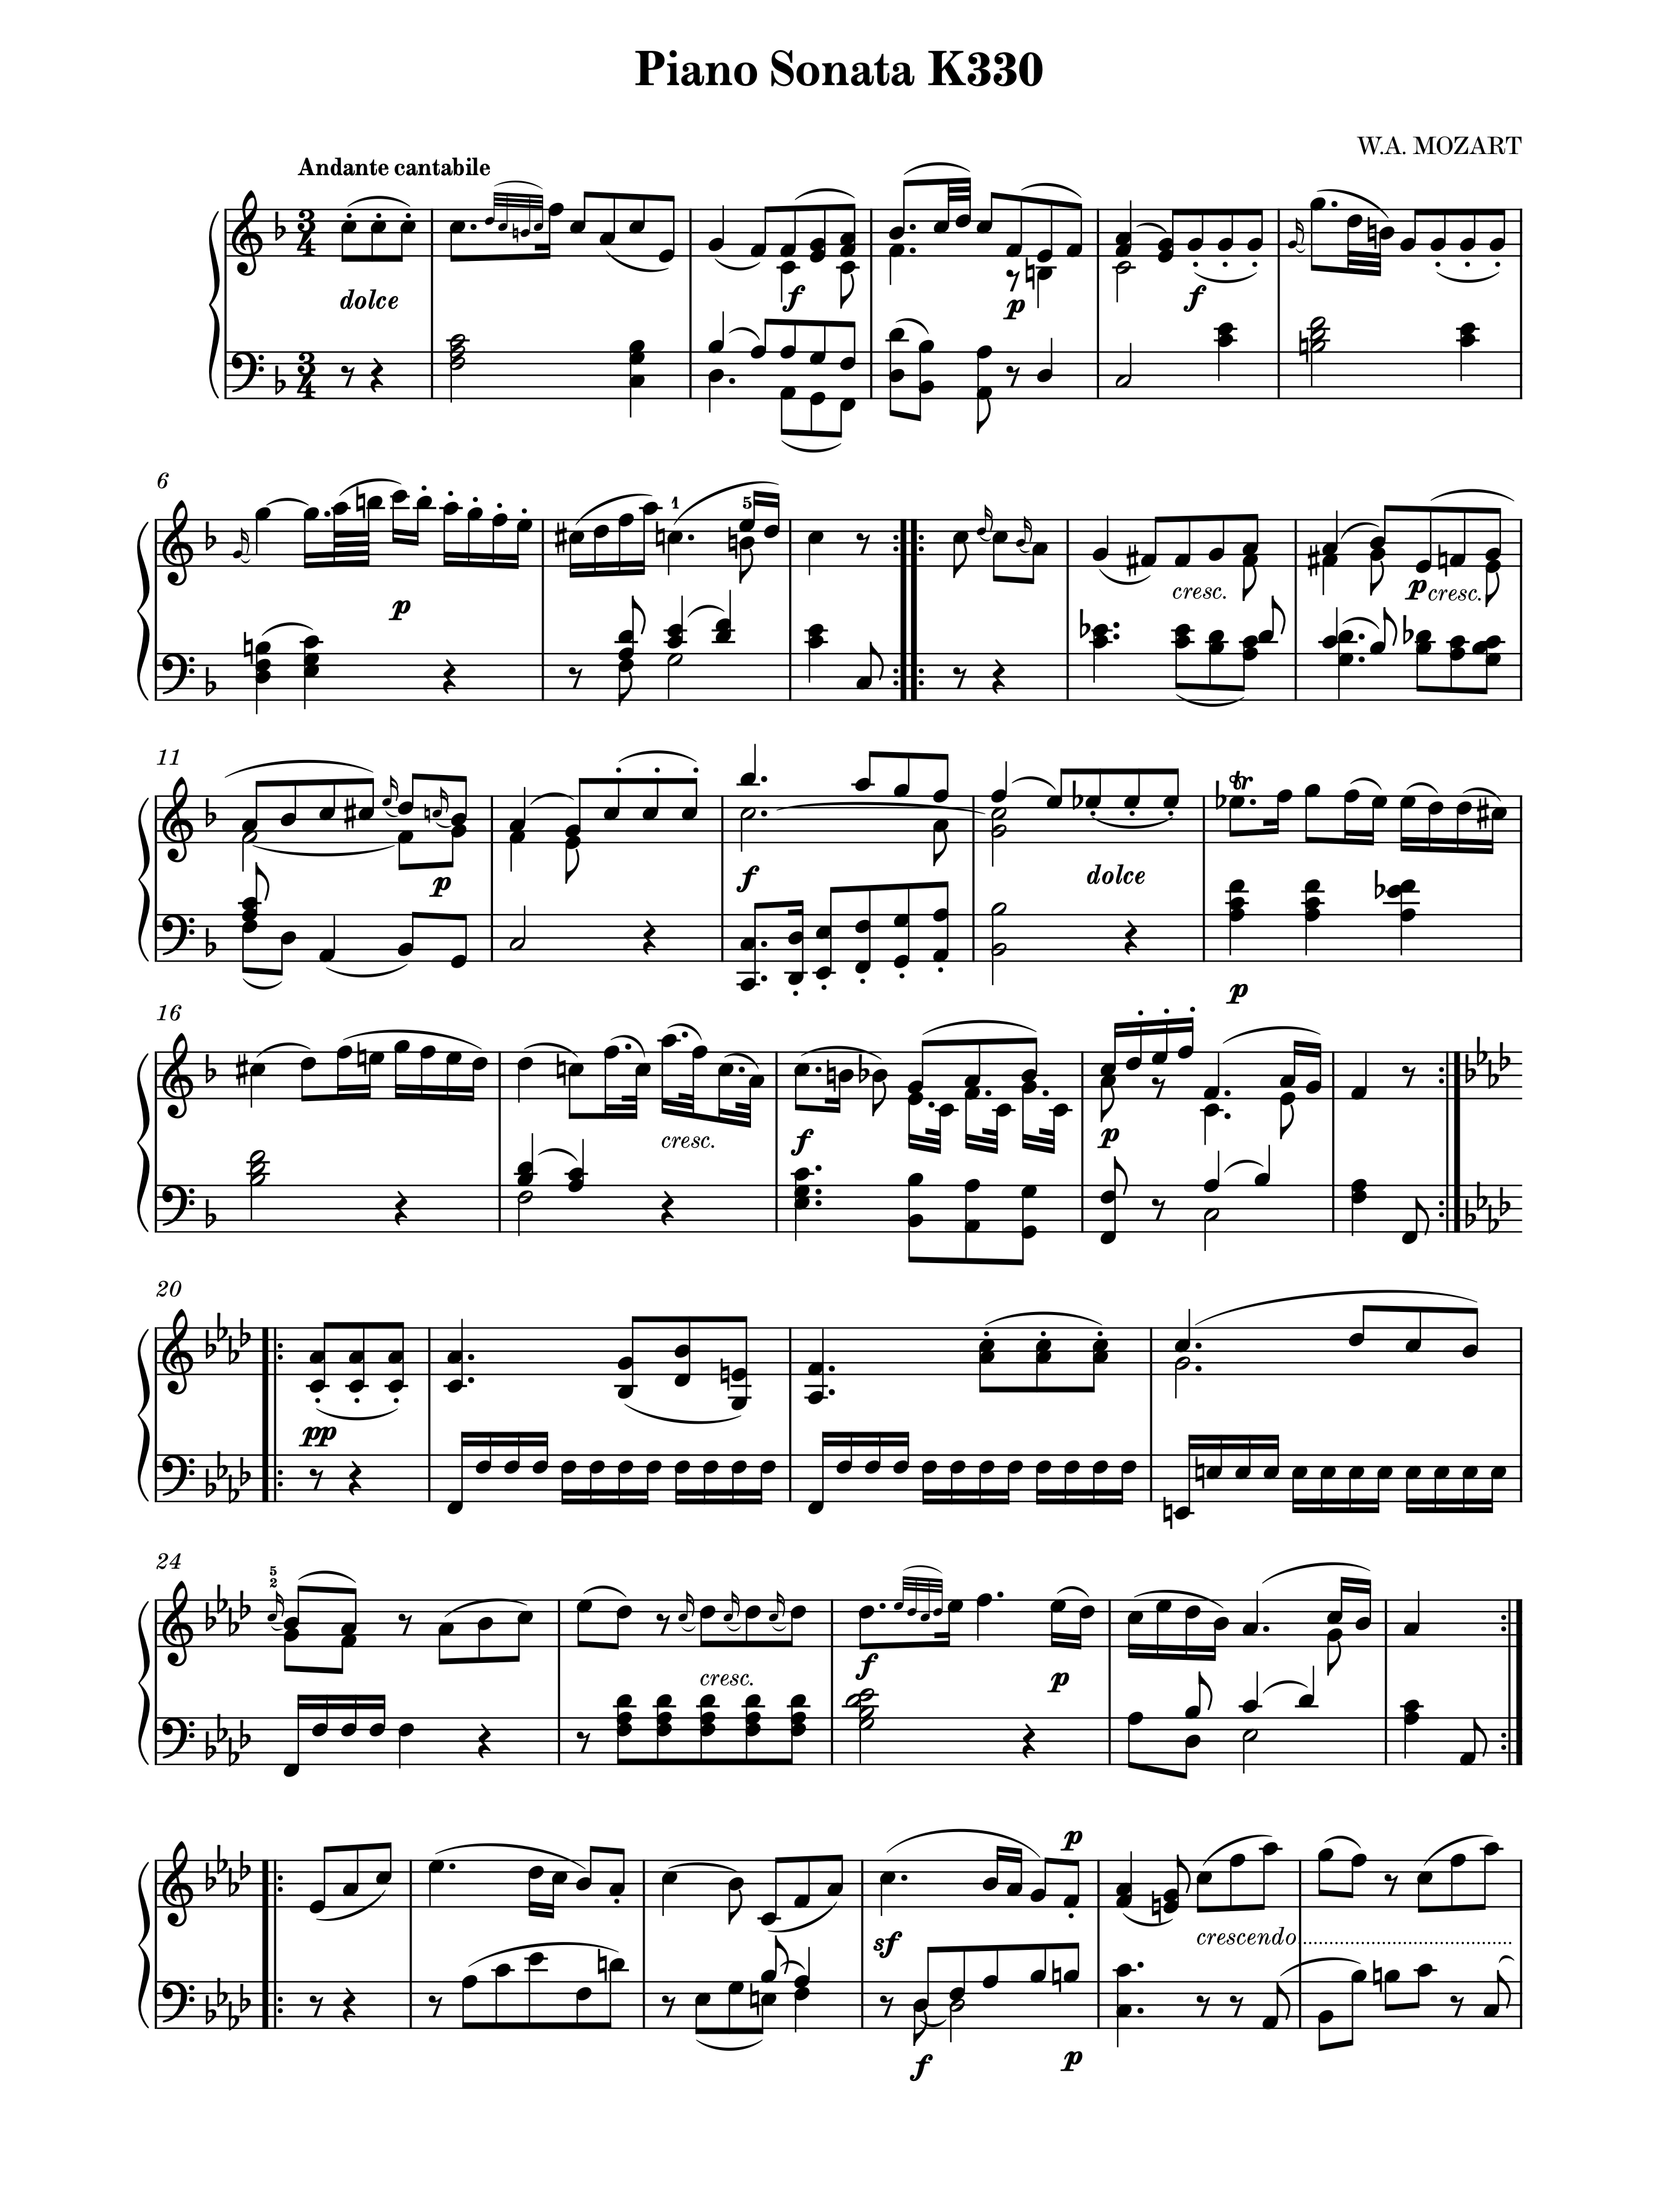 Mozart Piano K330 - Full score 001.png